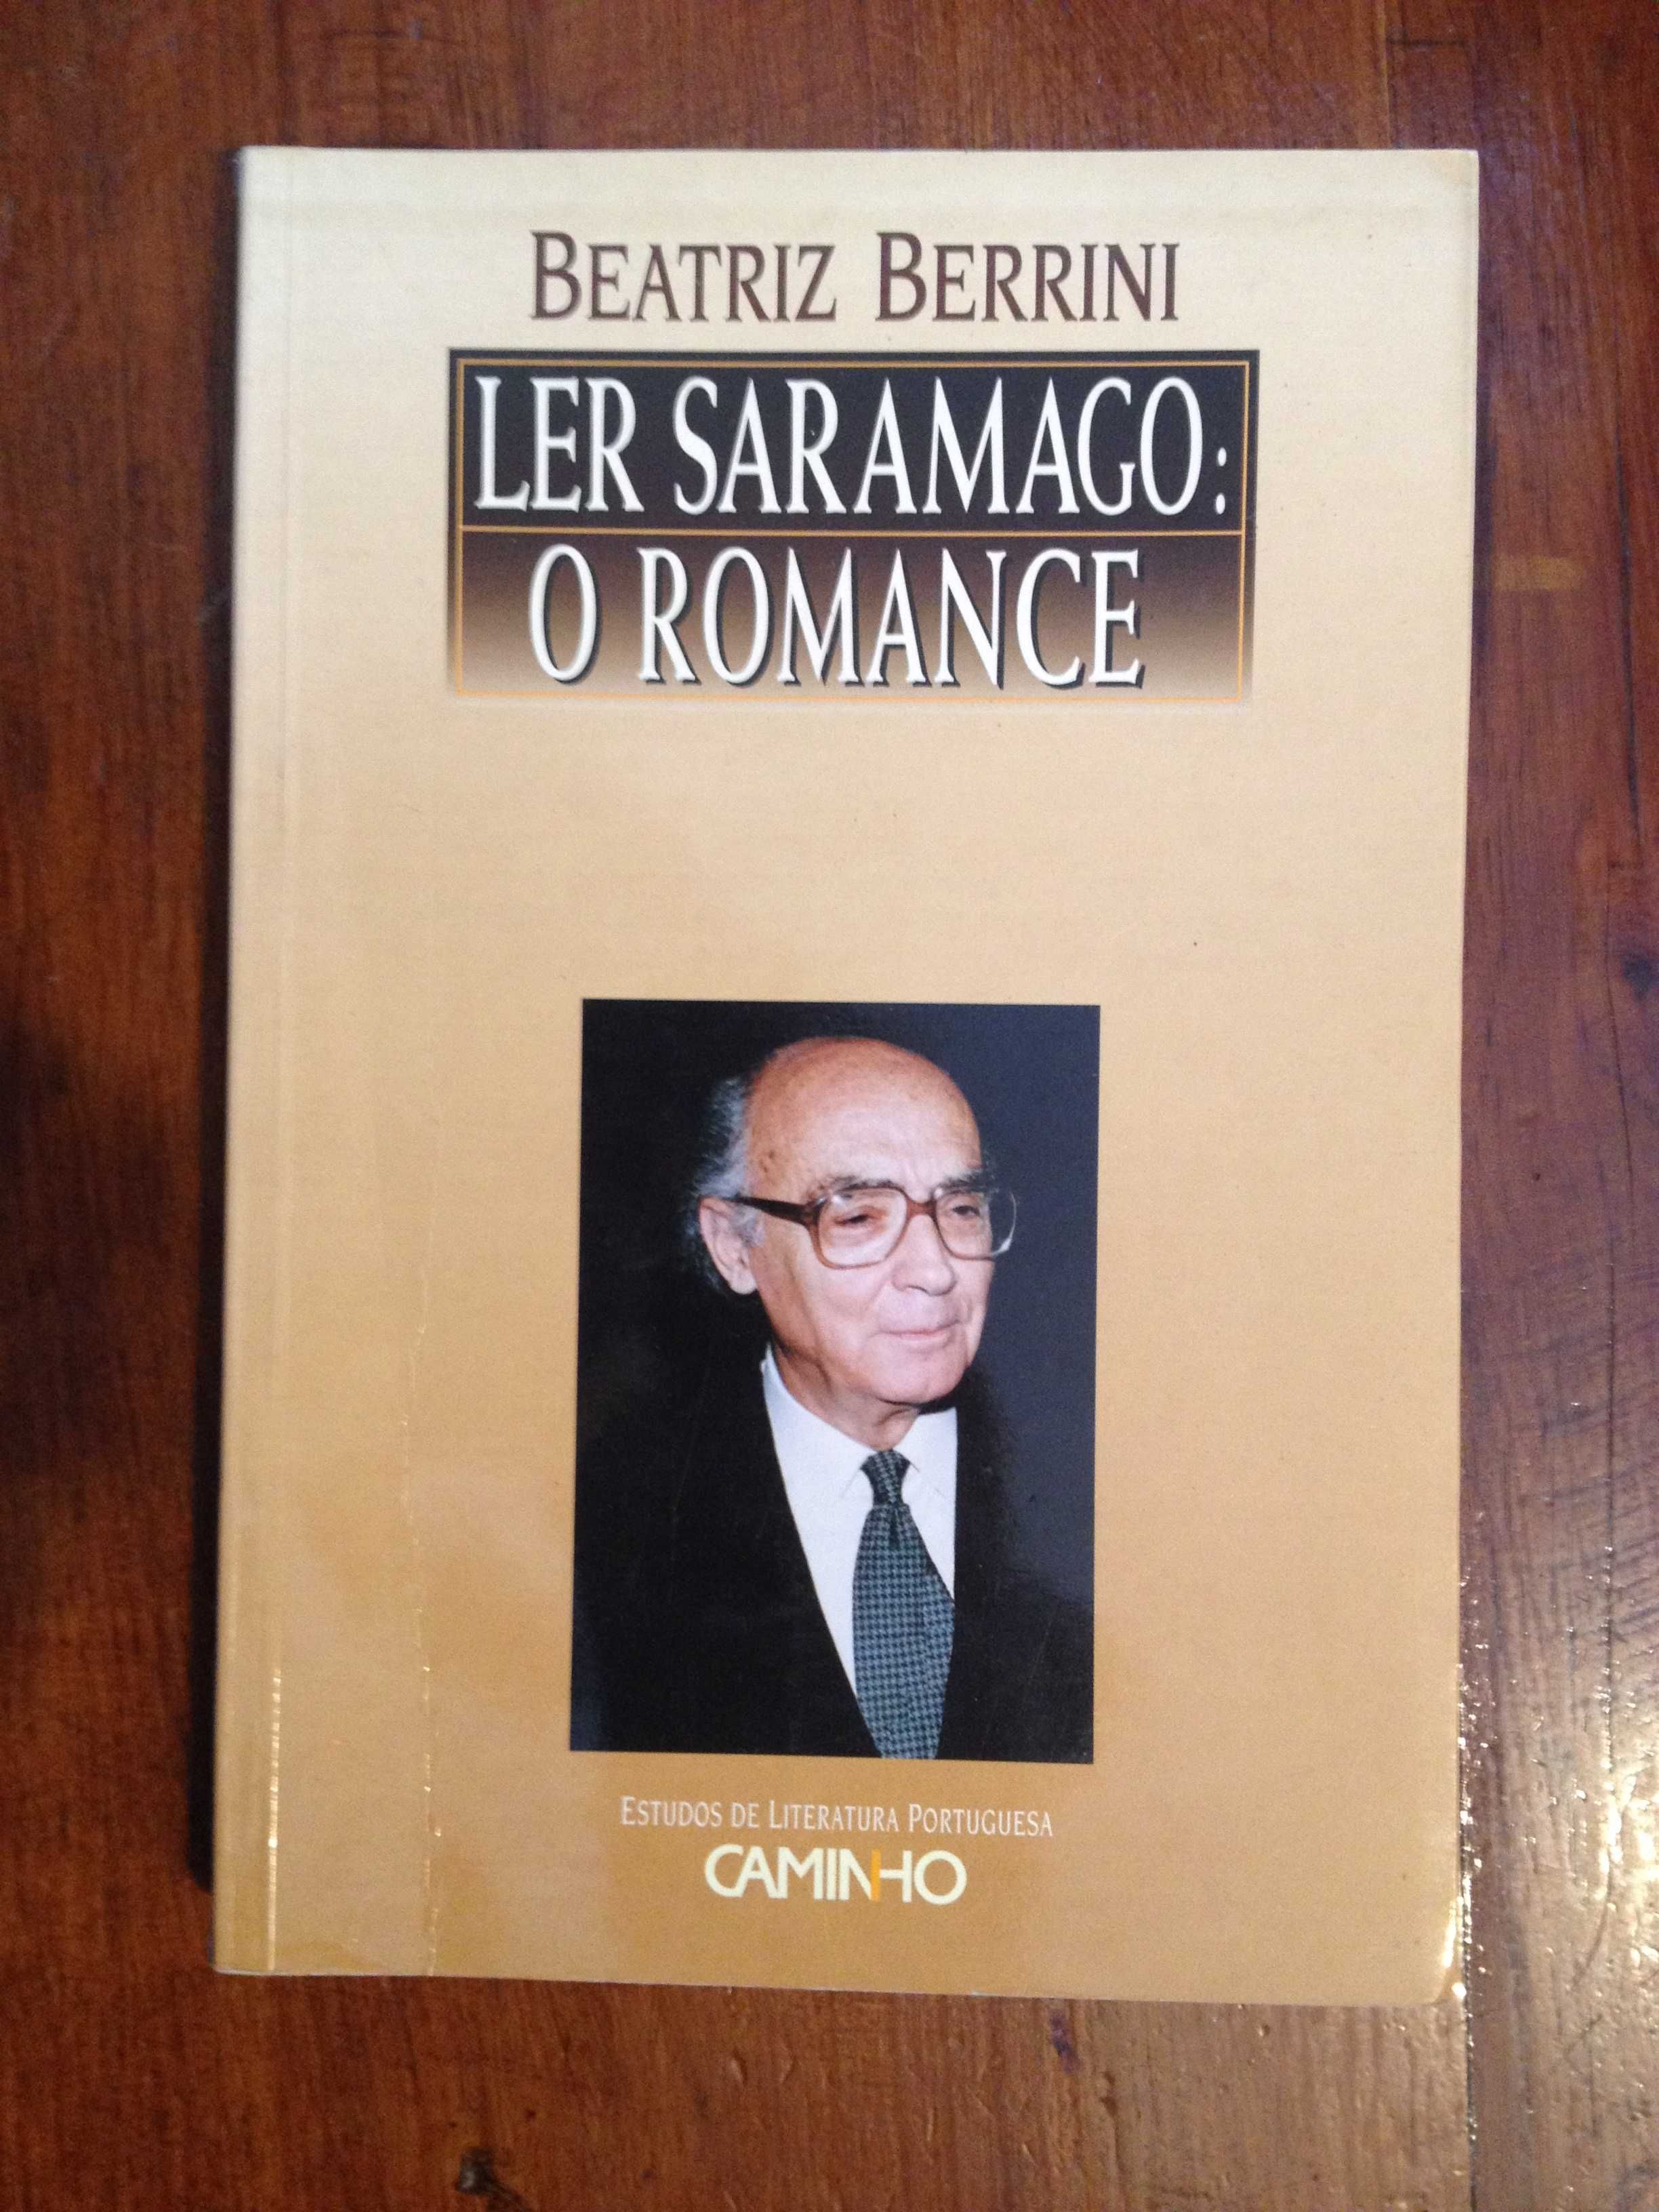 Beatriz Berrini - Ler Saramago: o romance